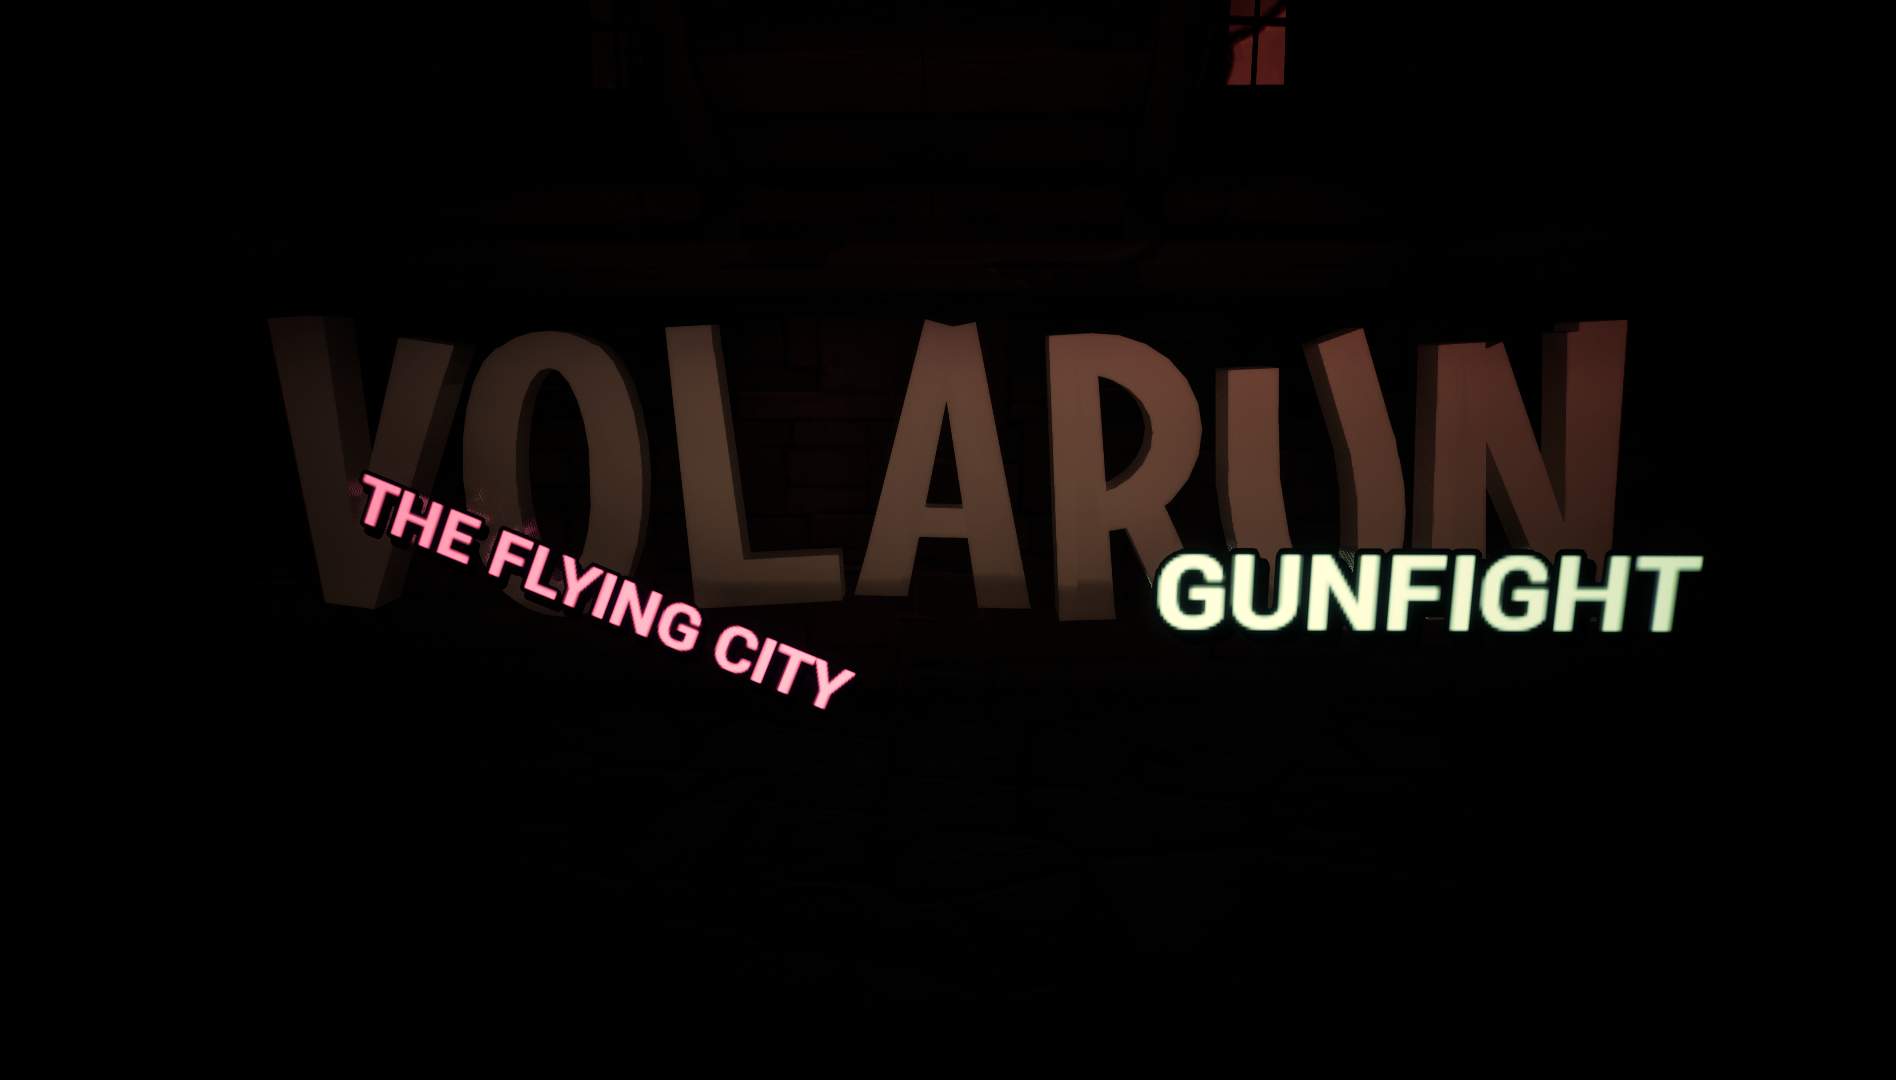 VOLARUN - THE FLYING CITY GUNFIGHT image 2